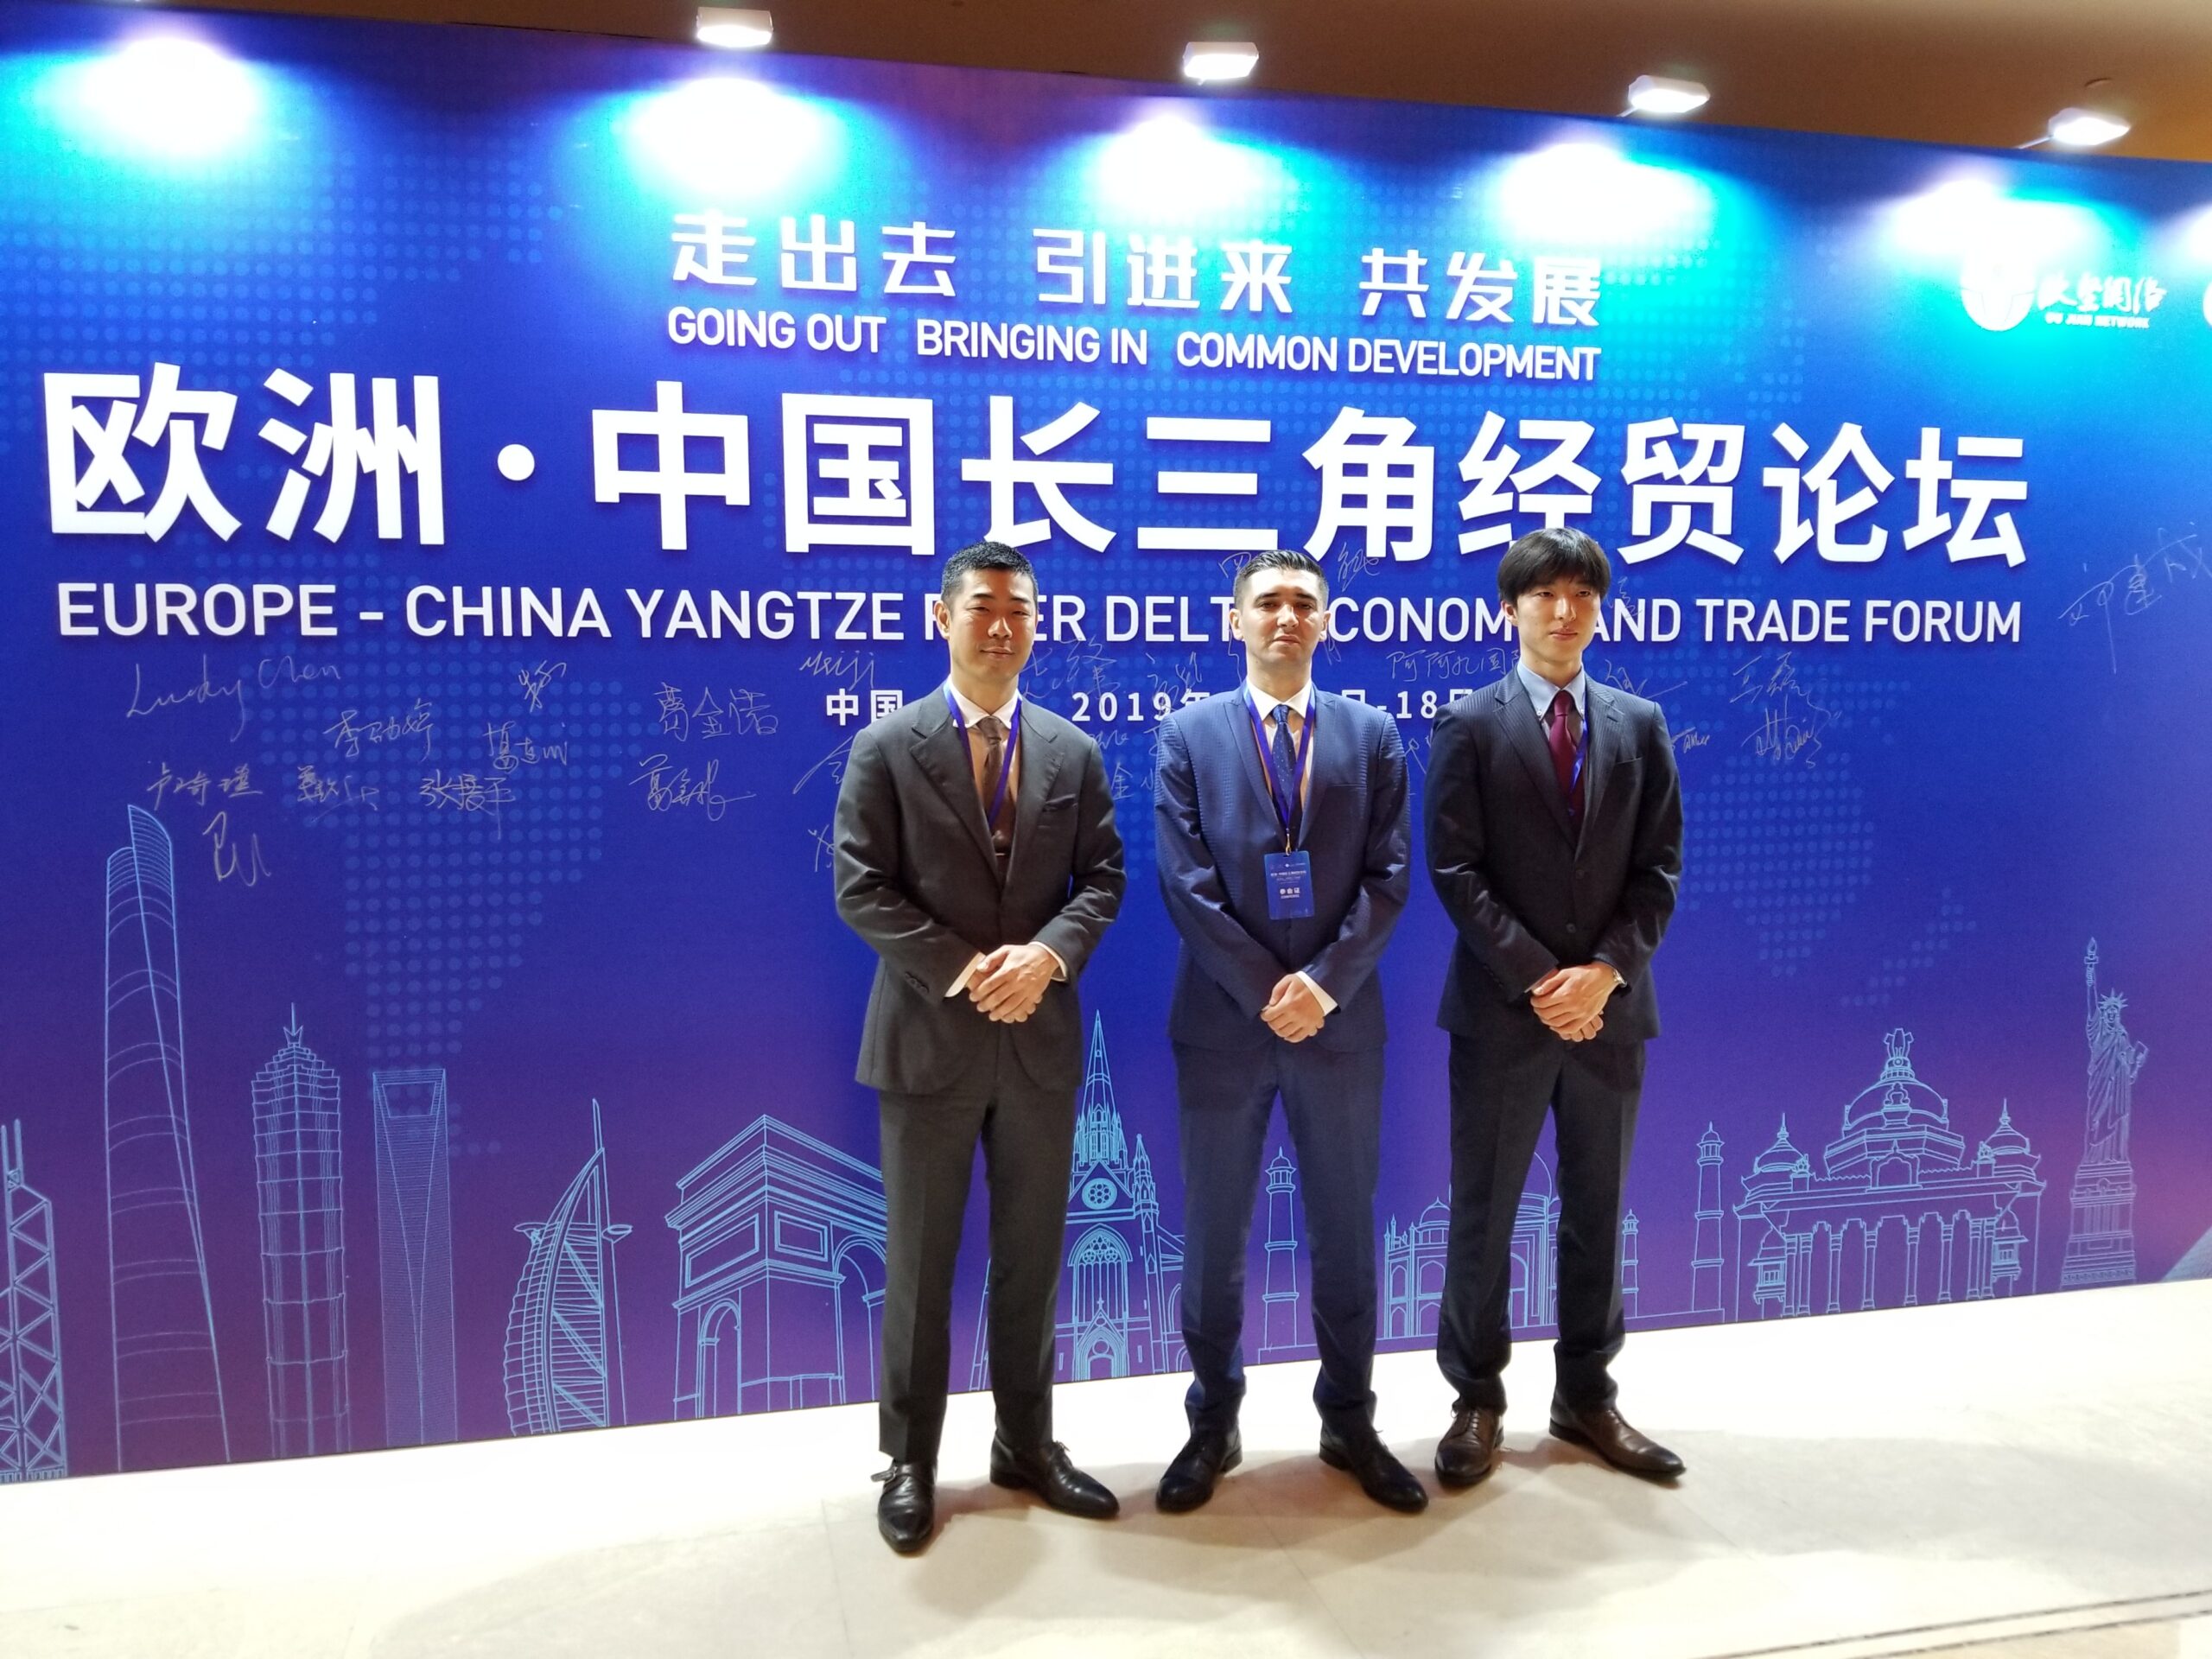 Suleyman alongside businessmen at an event in Shanghai